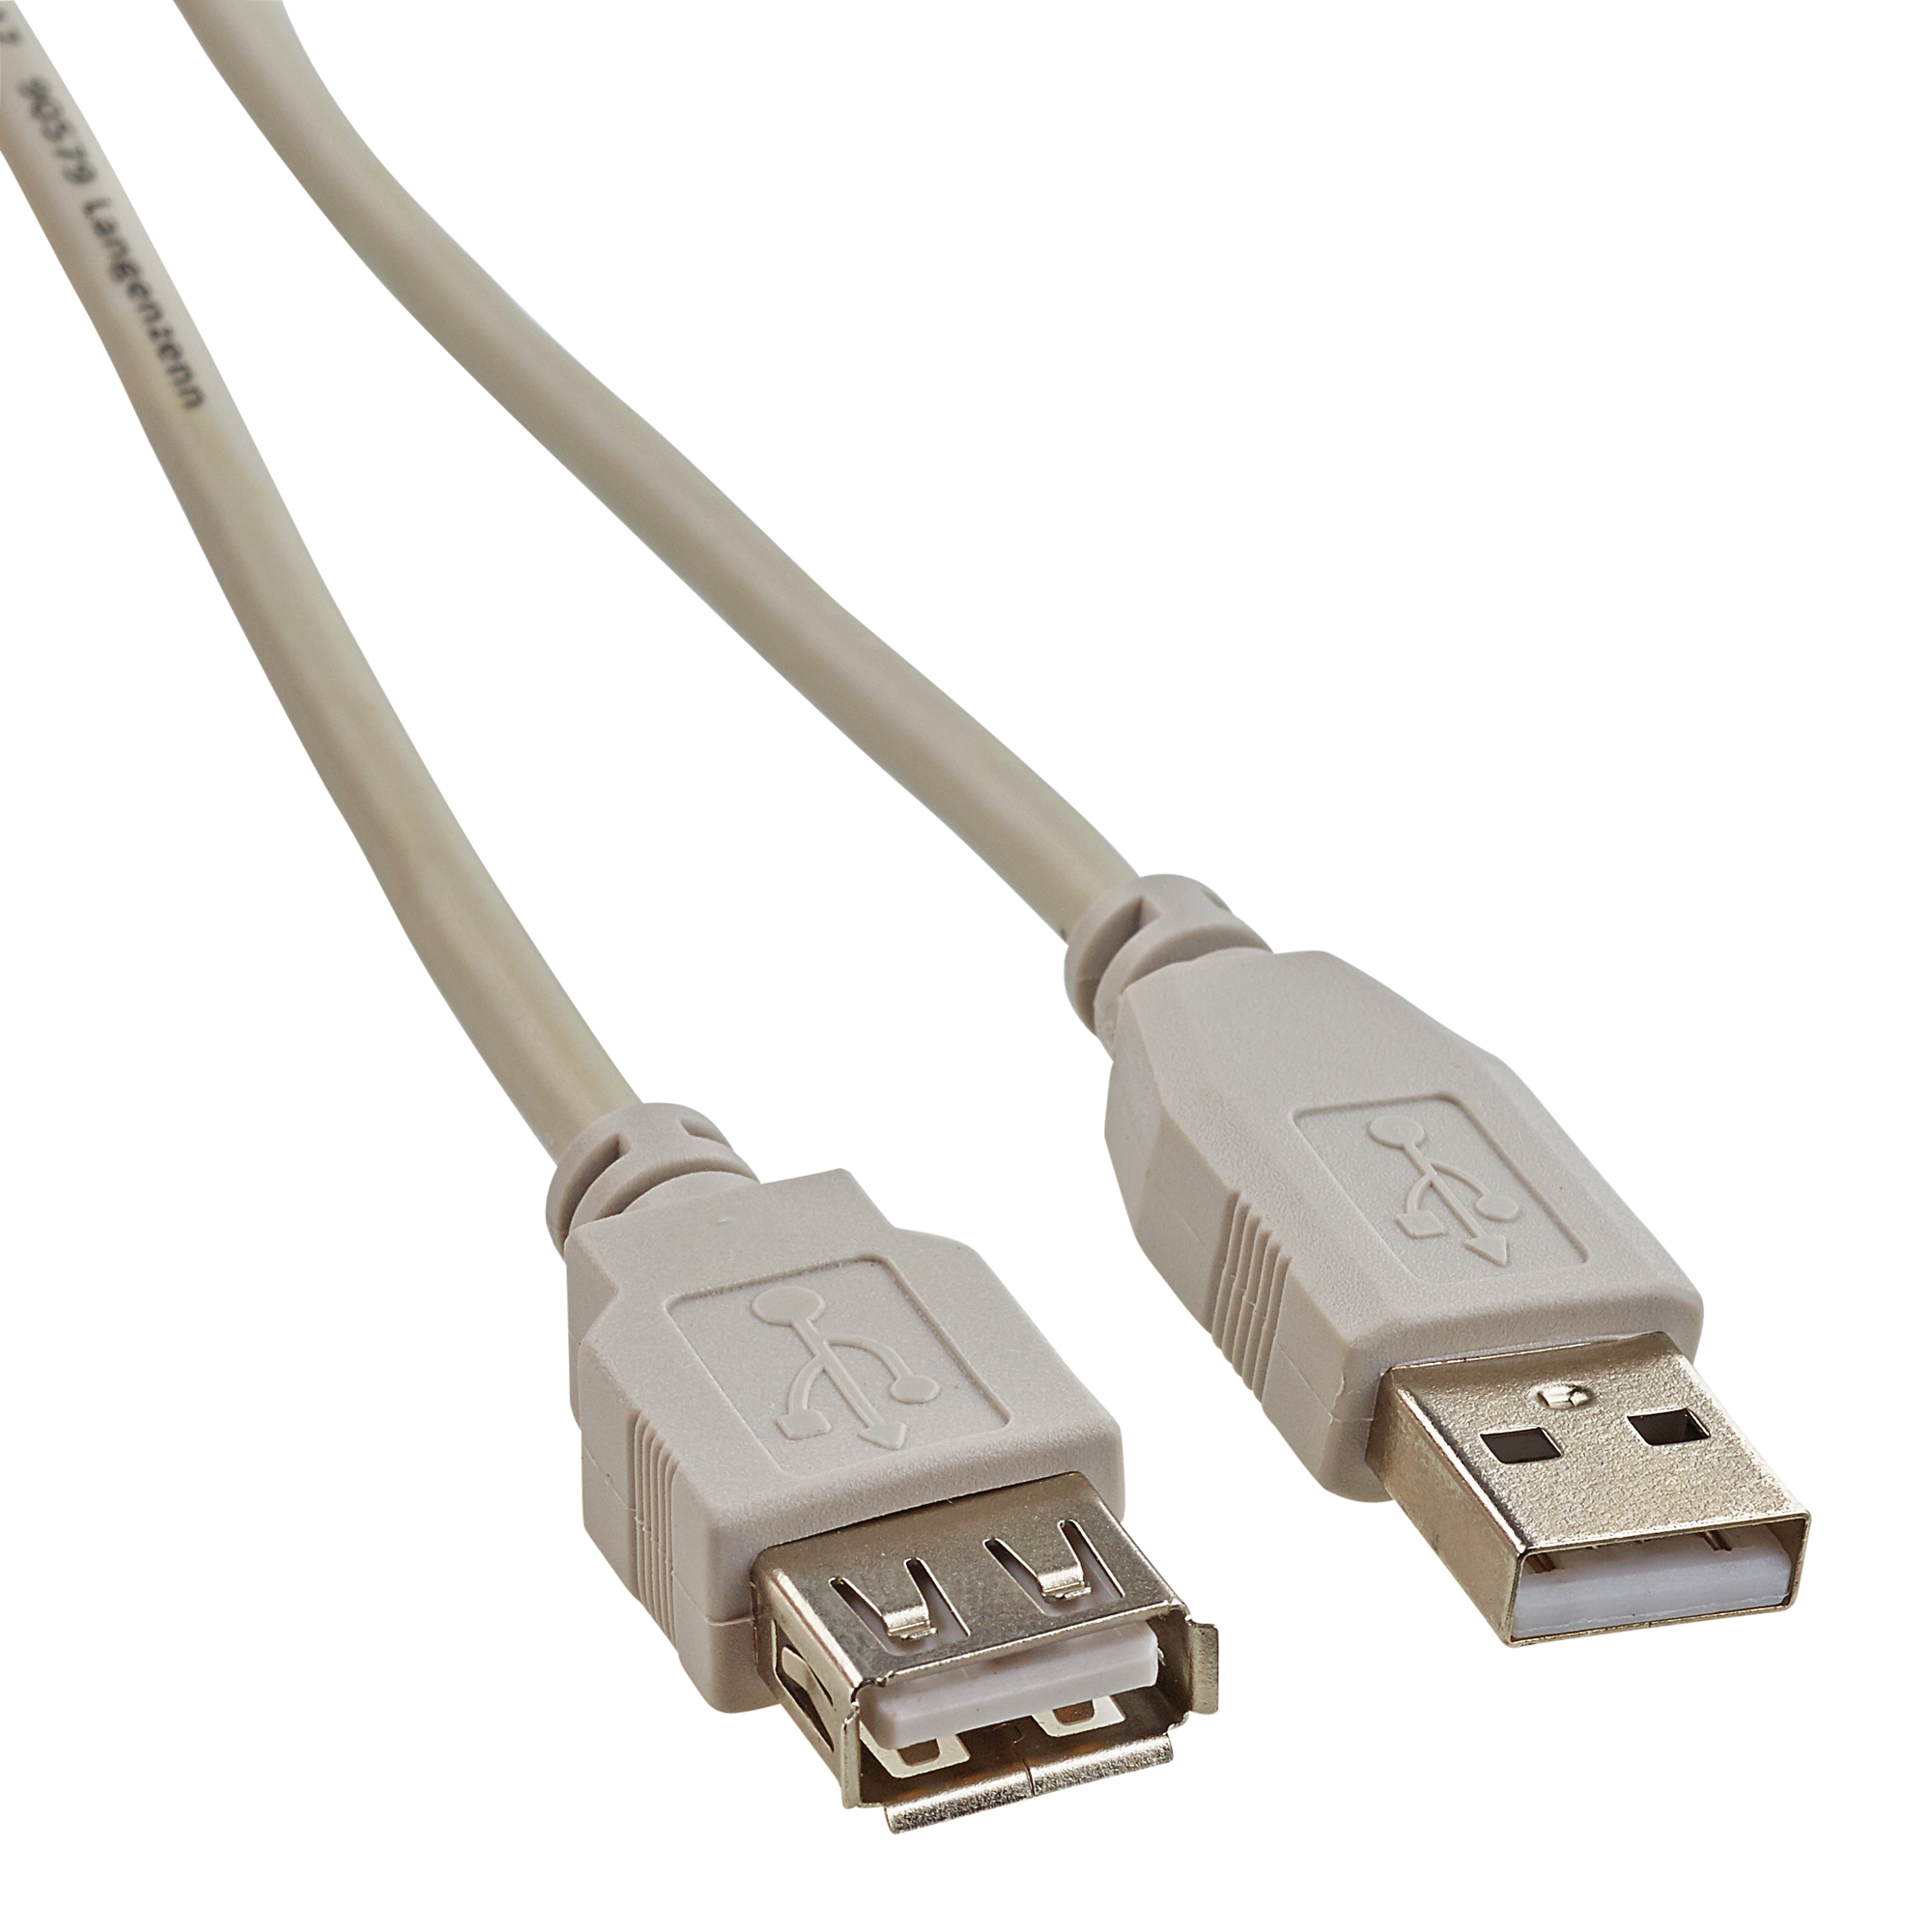 USB-Verlängerungskabel "Phone & Computer" Professional 2 m + product picture